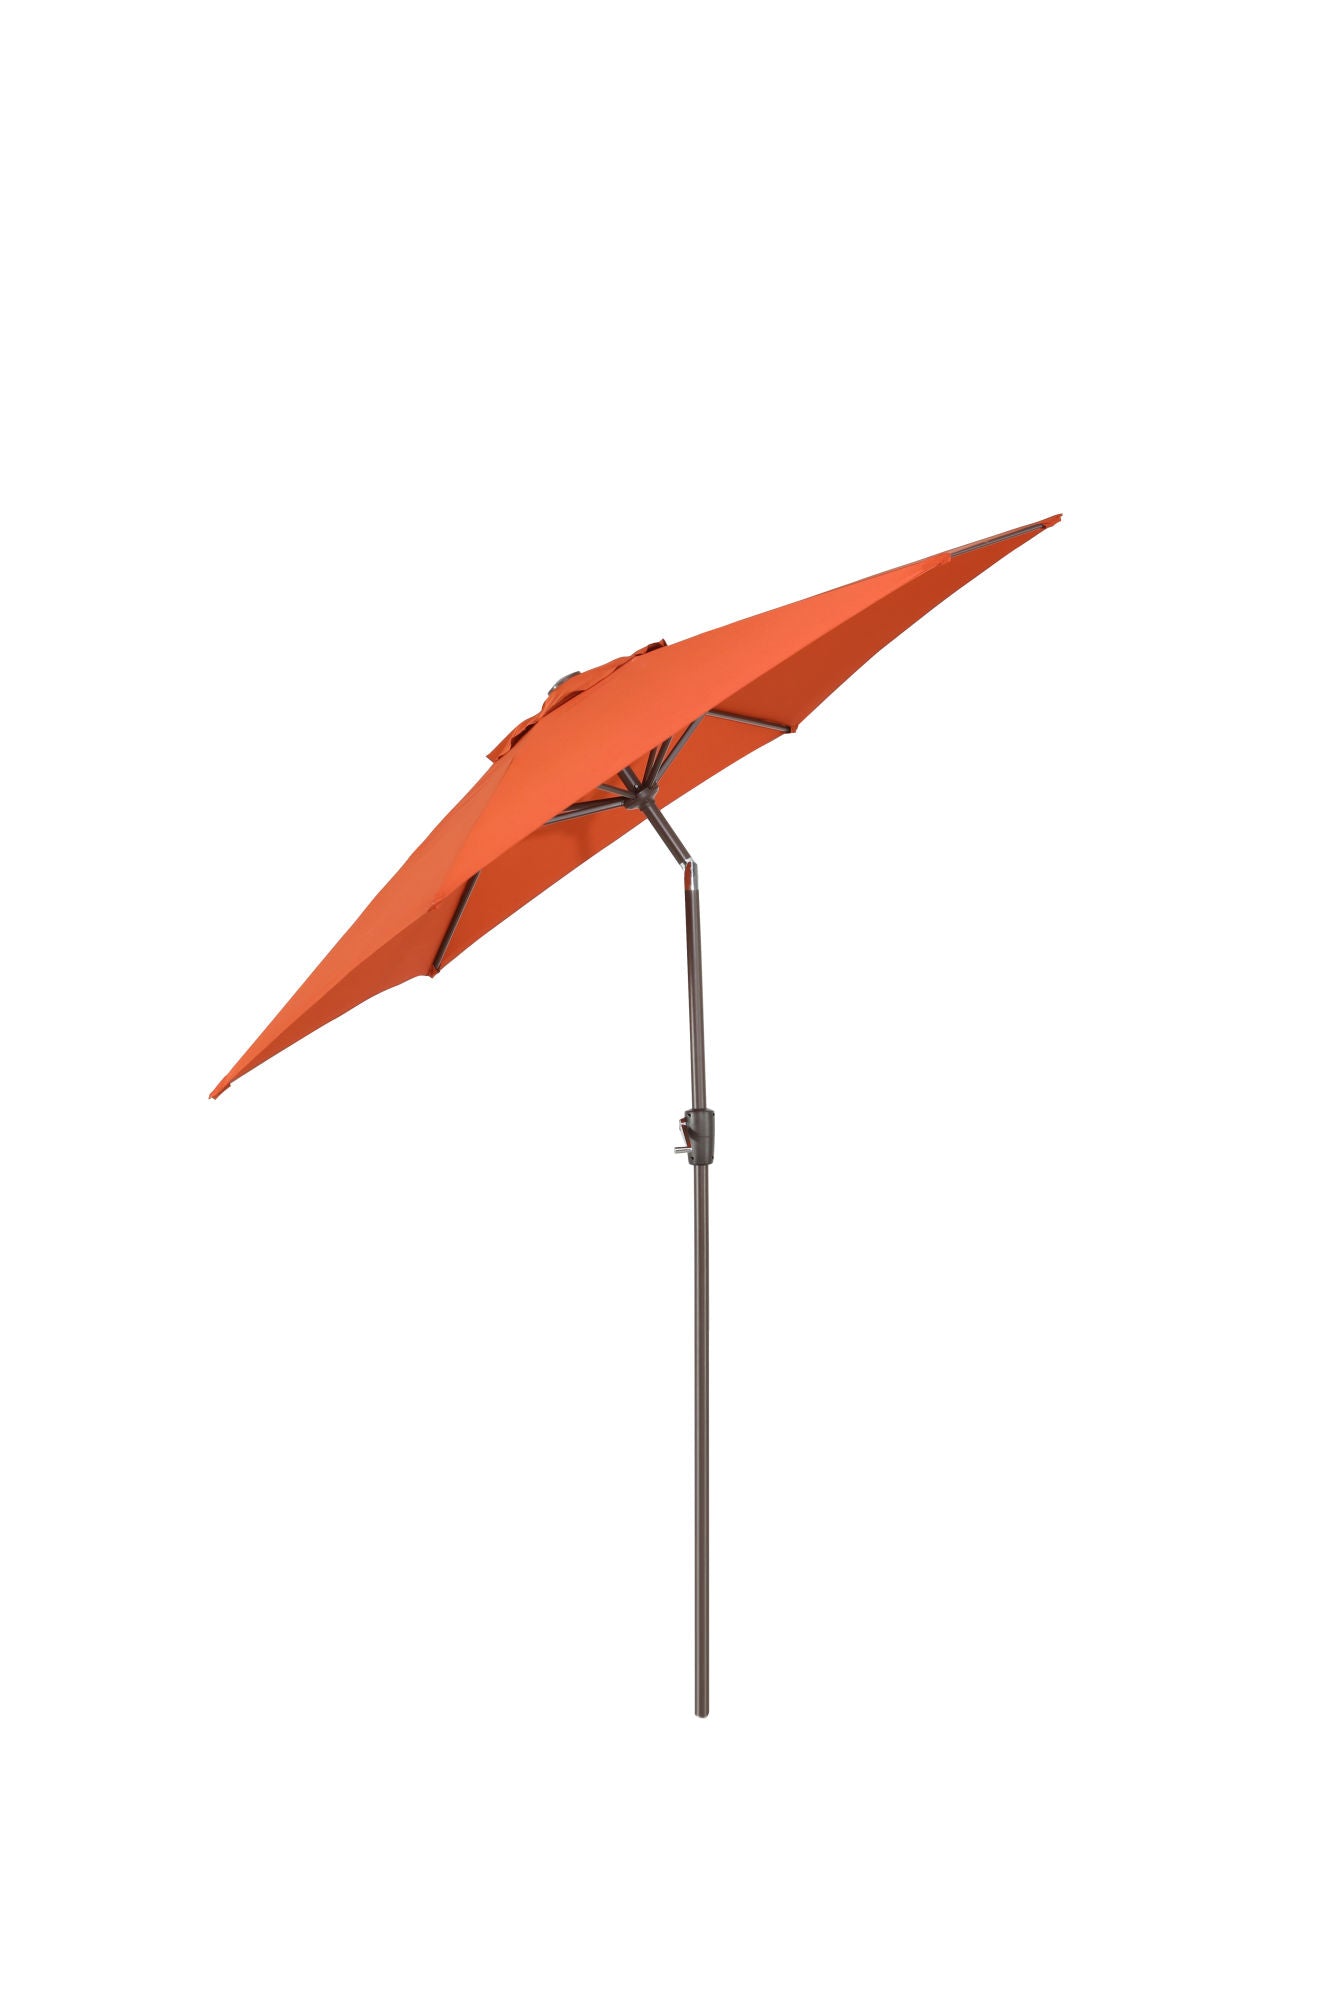 9 Feet Patio Umbrella